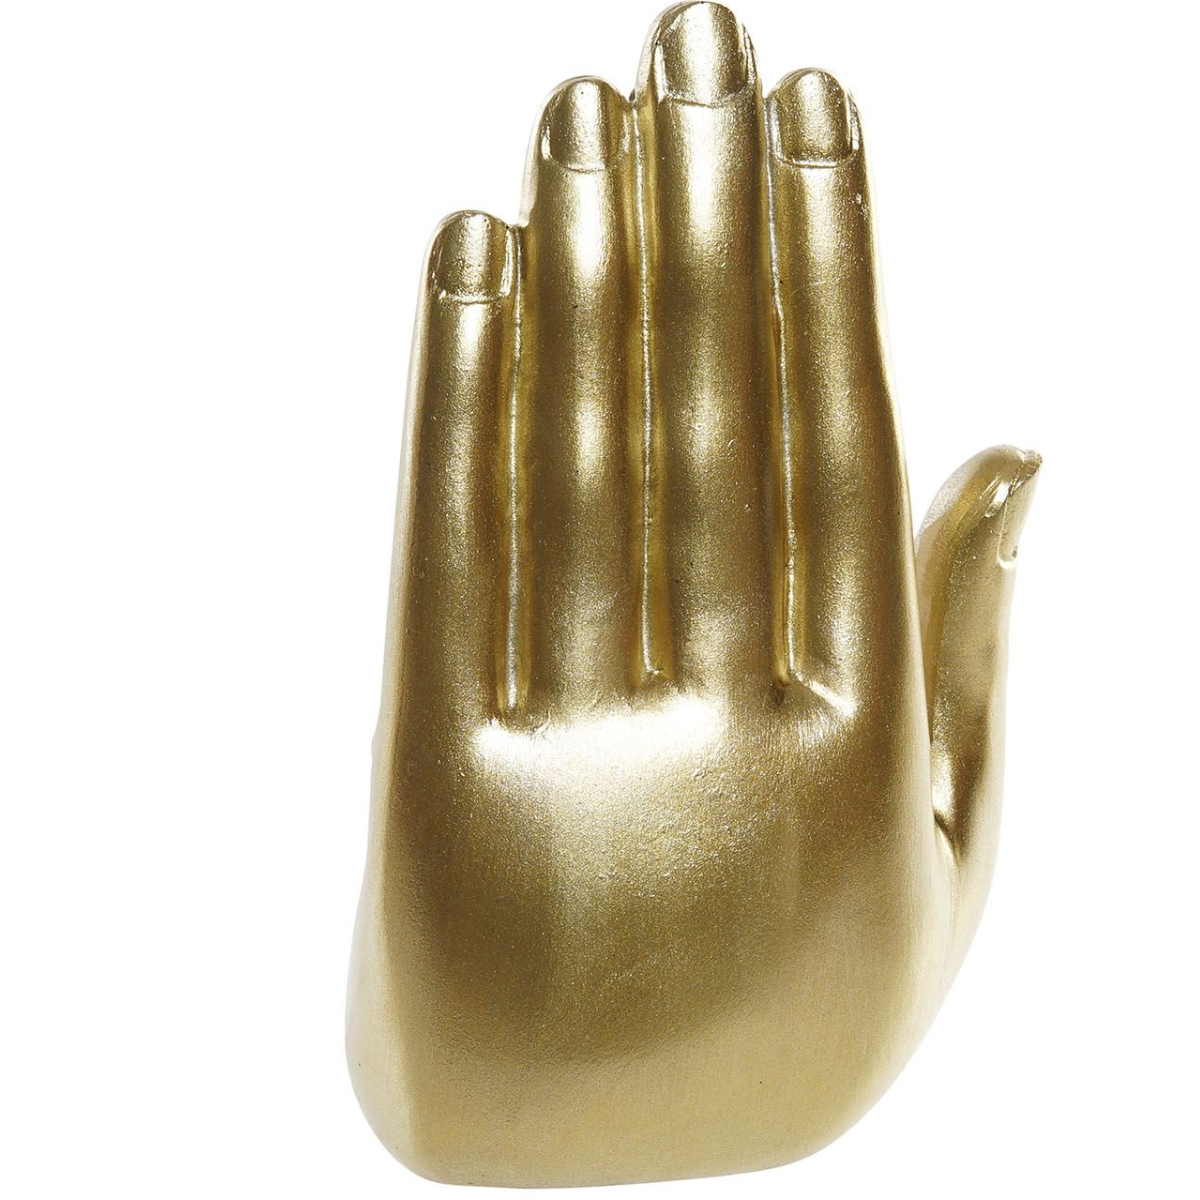 Golden resin figurine The Hand of Buddha